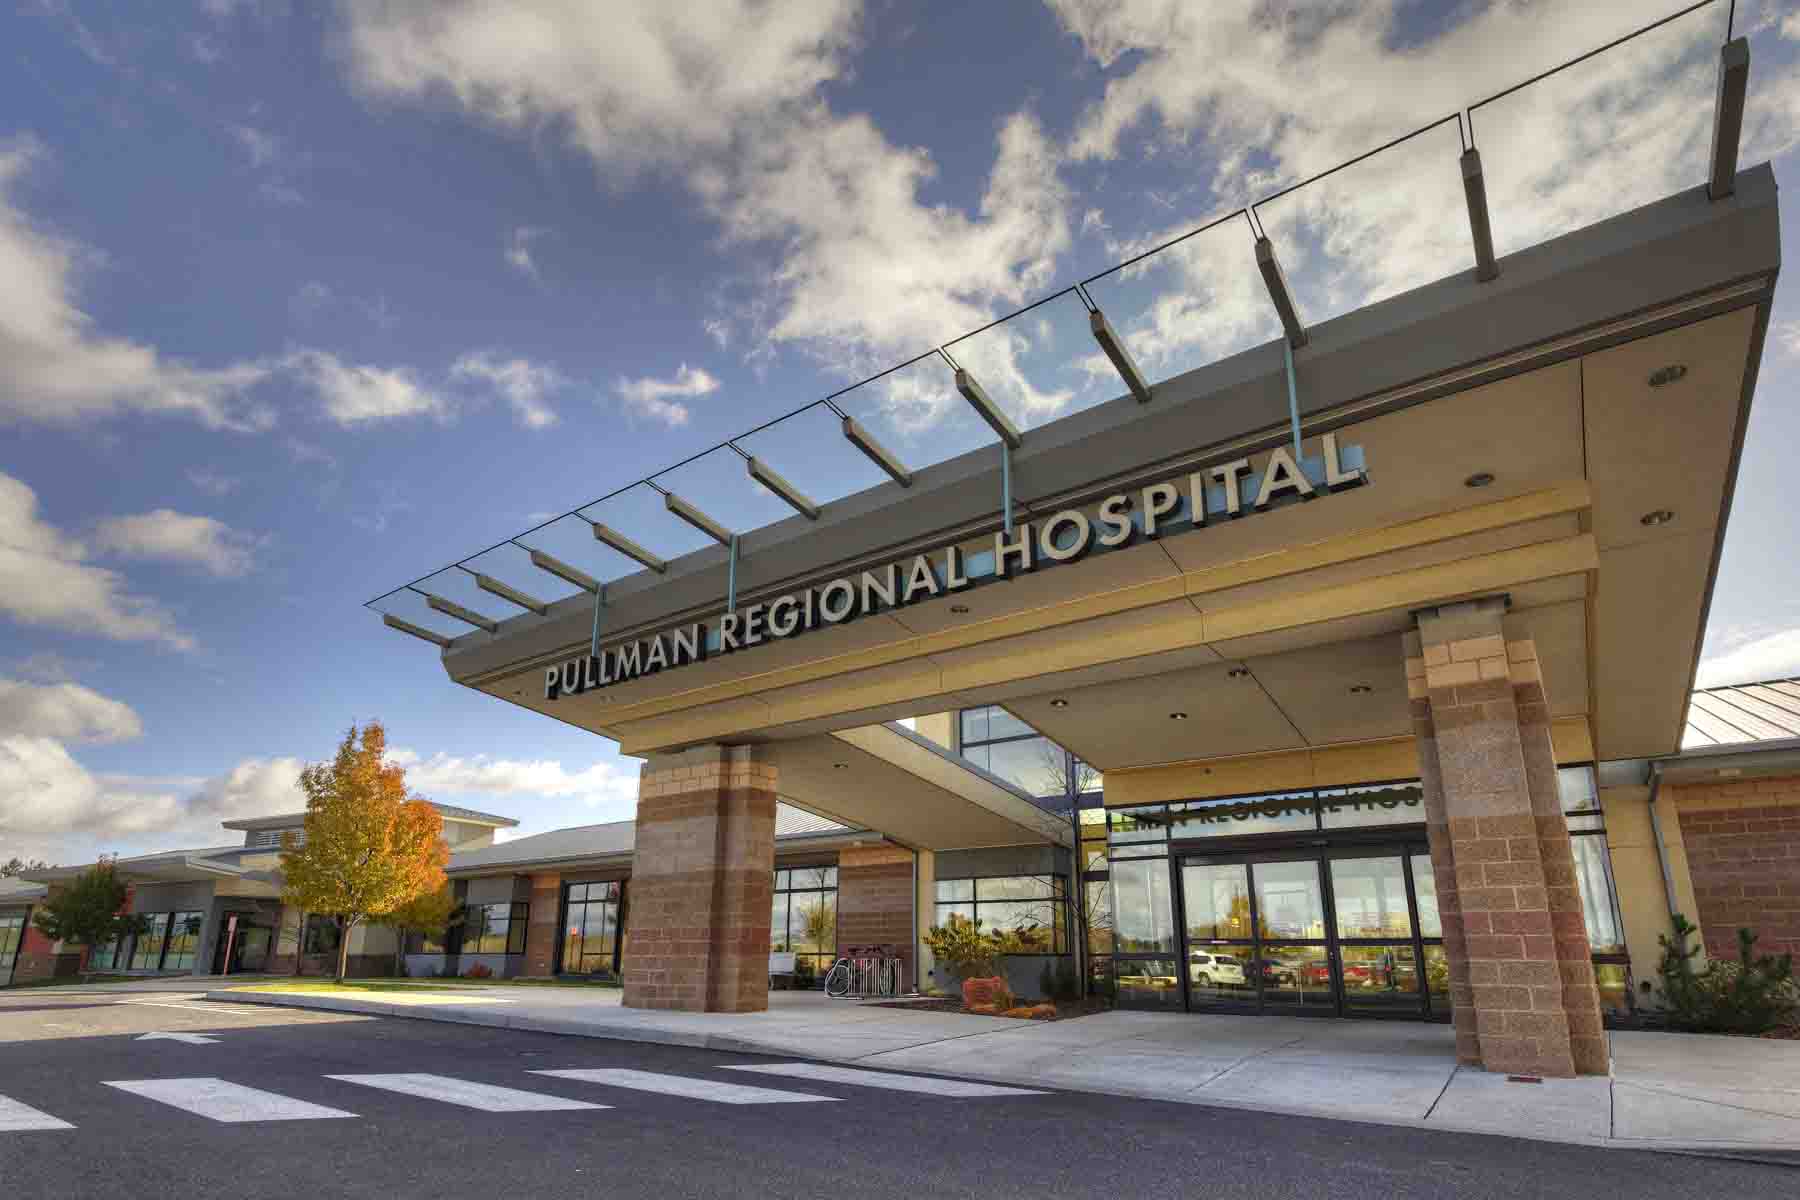 Pullman Regional Hospital